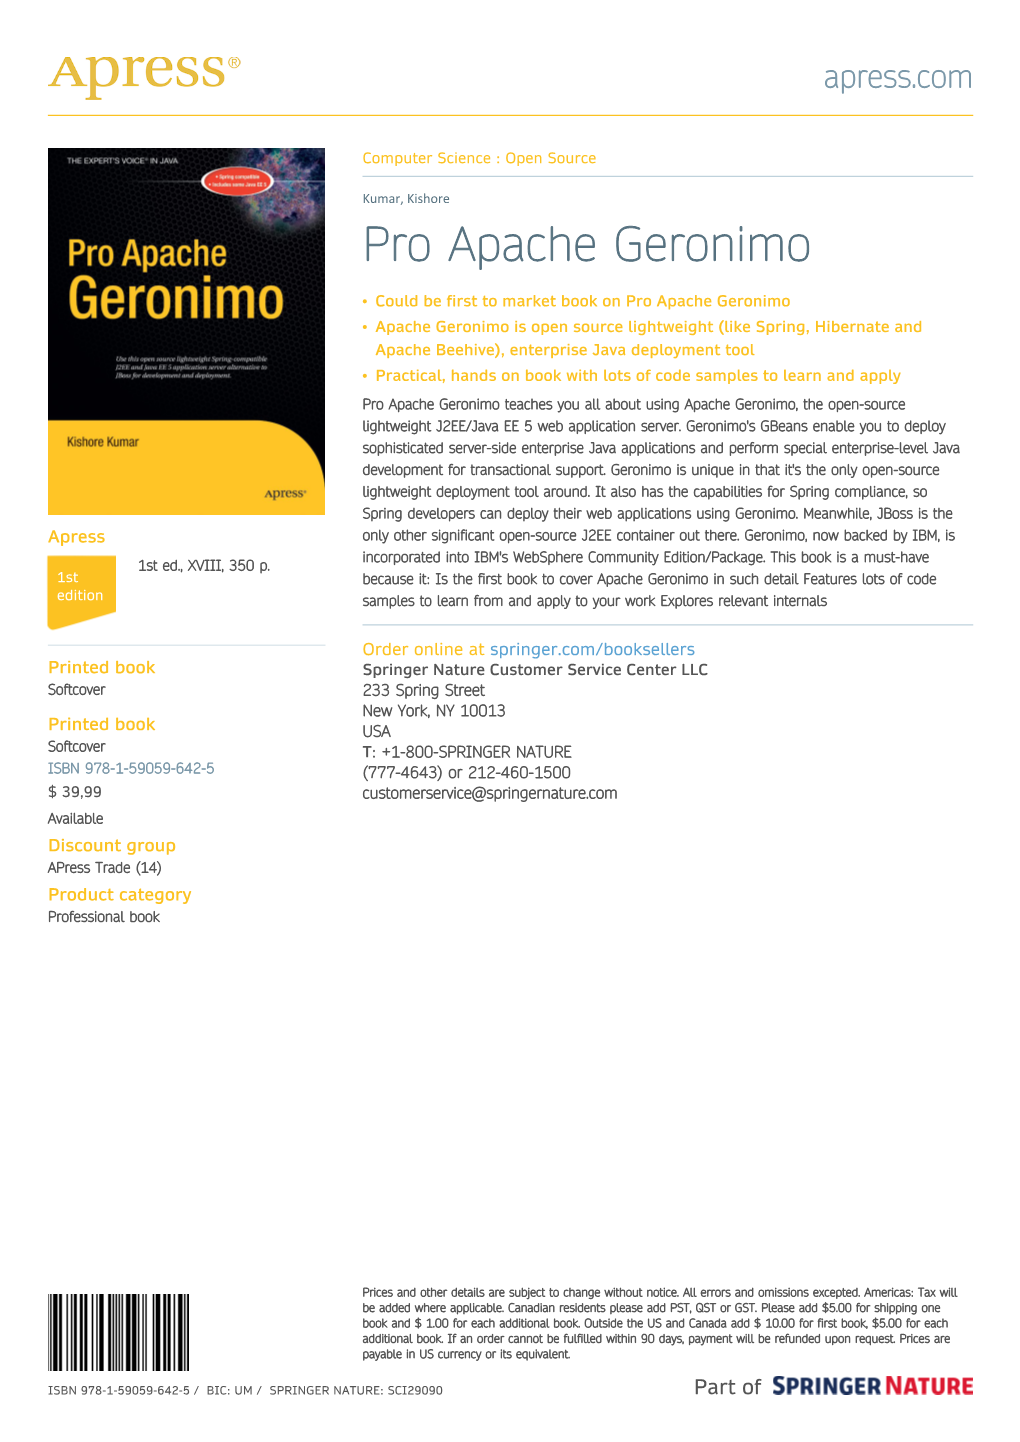 Pro Apache Geronimo